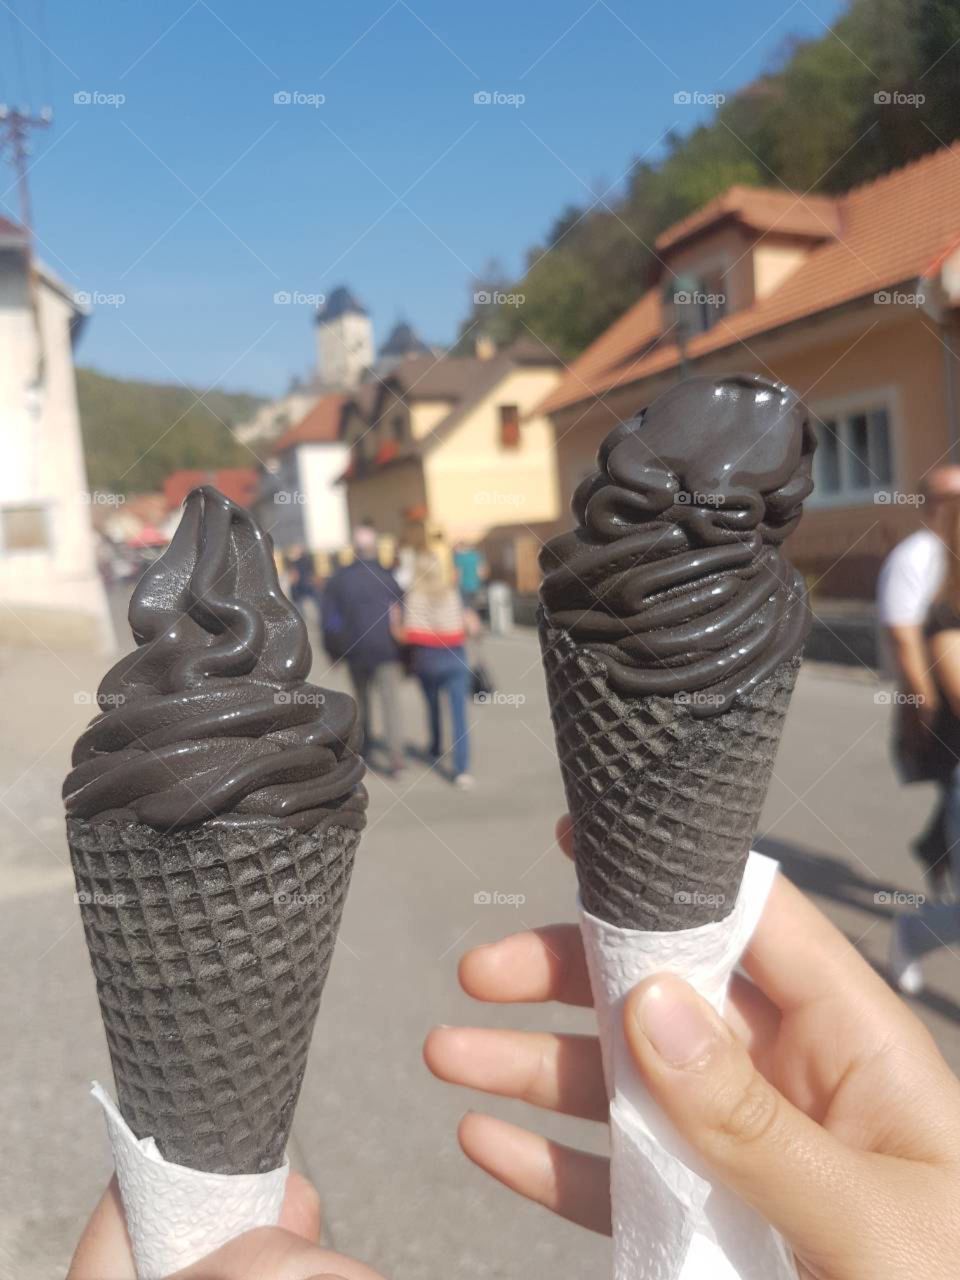 Charcoal Ice cream